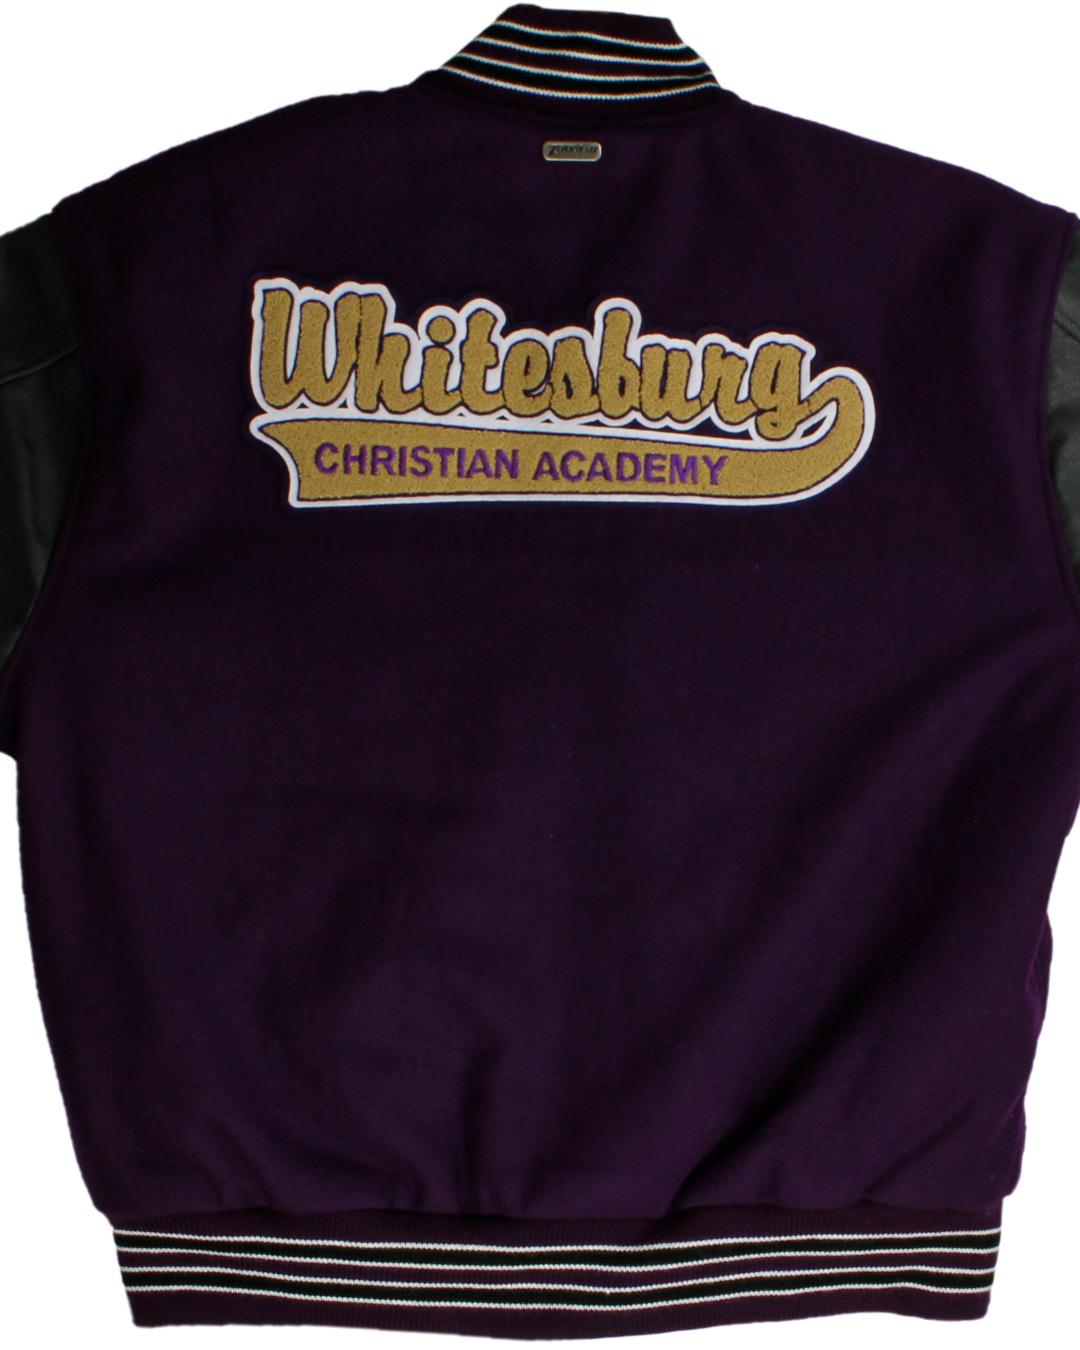 Whitesburg Christian Academy Letterman, Huntsville, Alabama - Back (1)